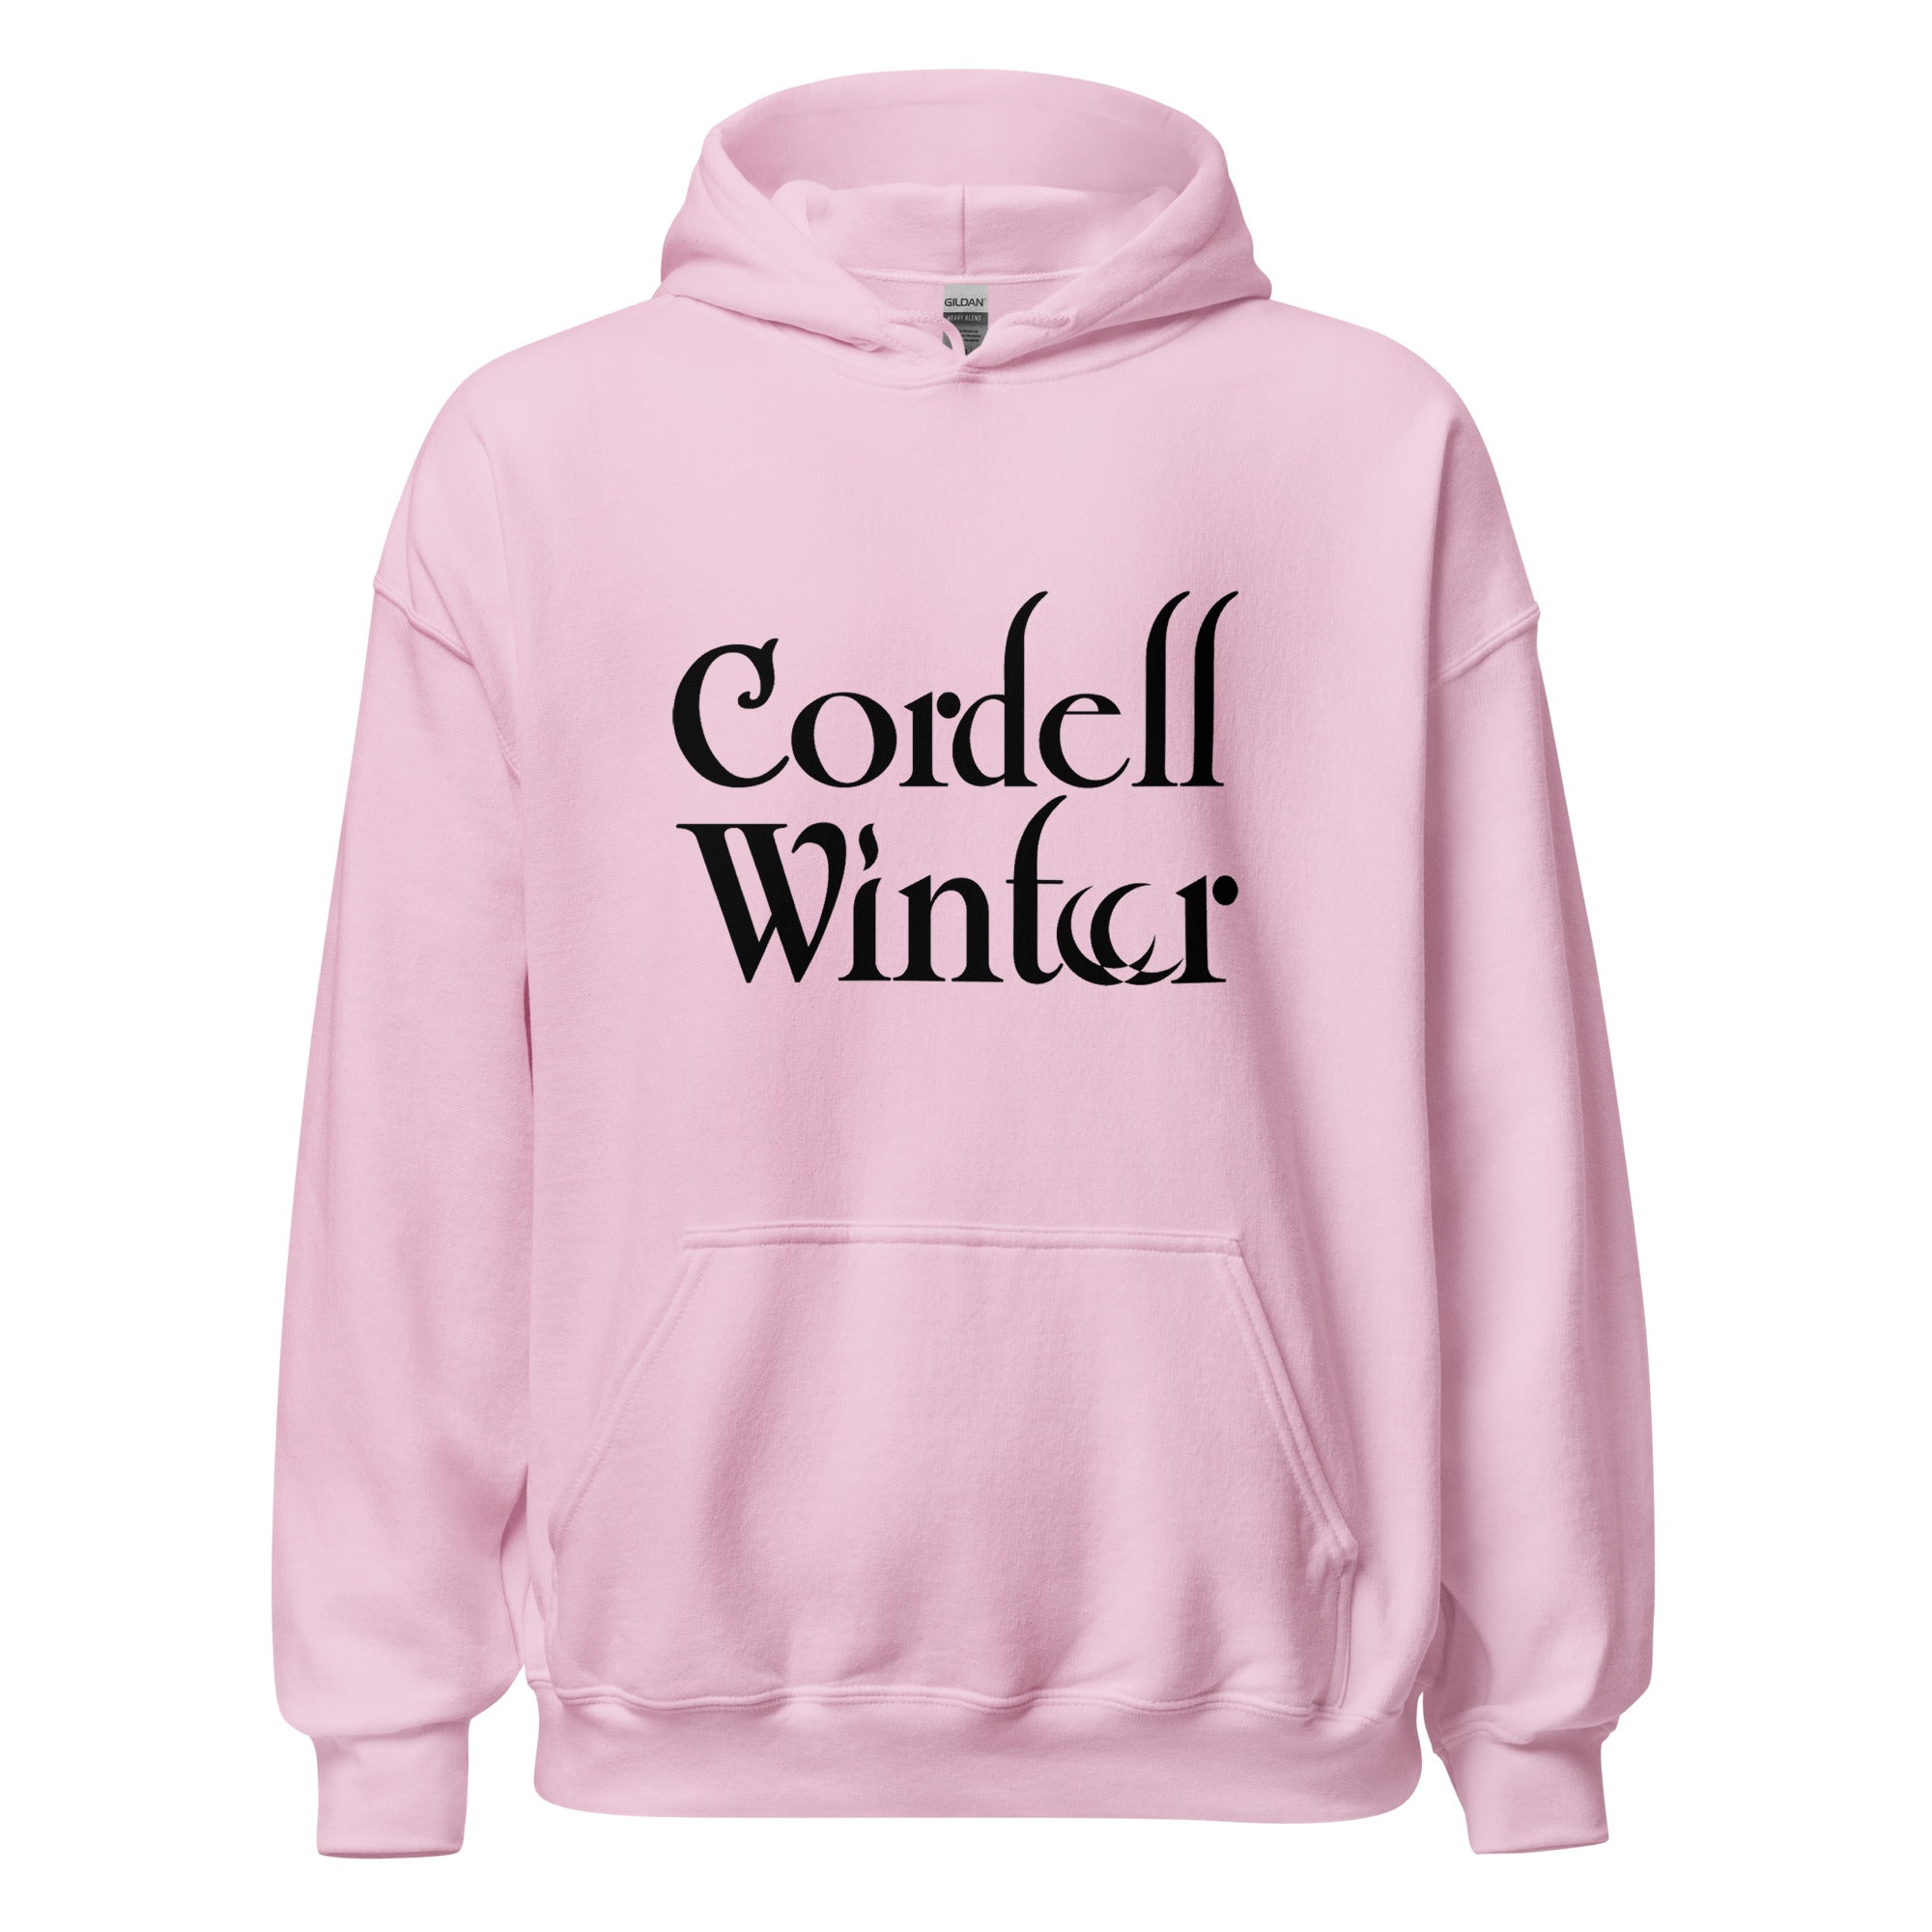 Cordell Winter - Unisex Hoodie